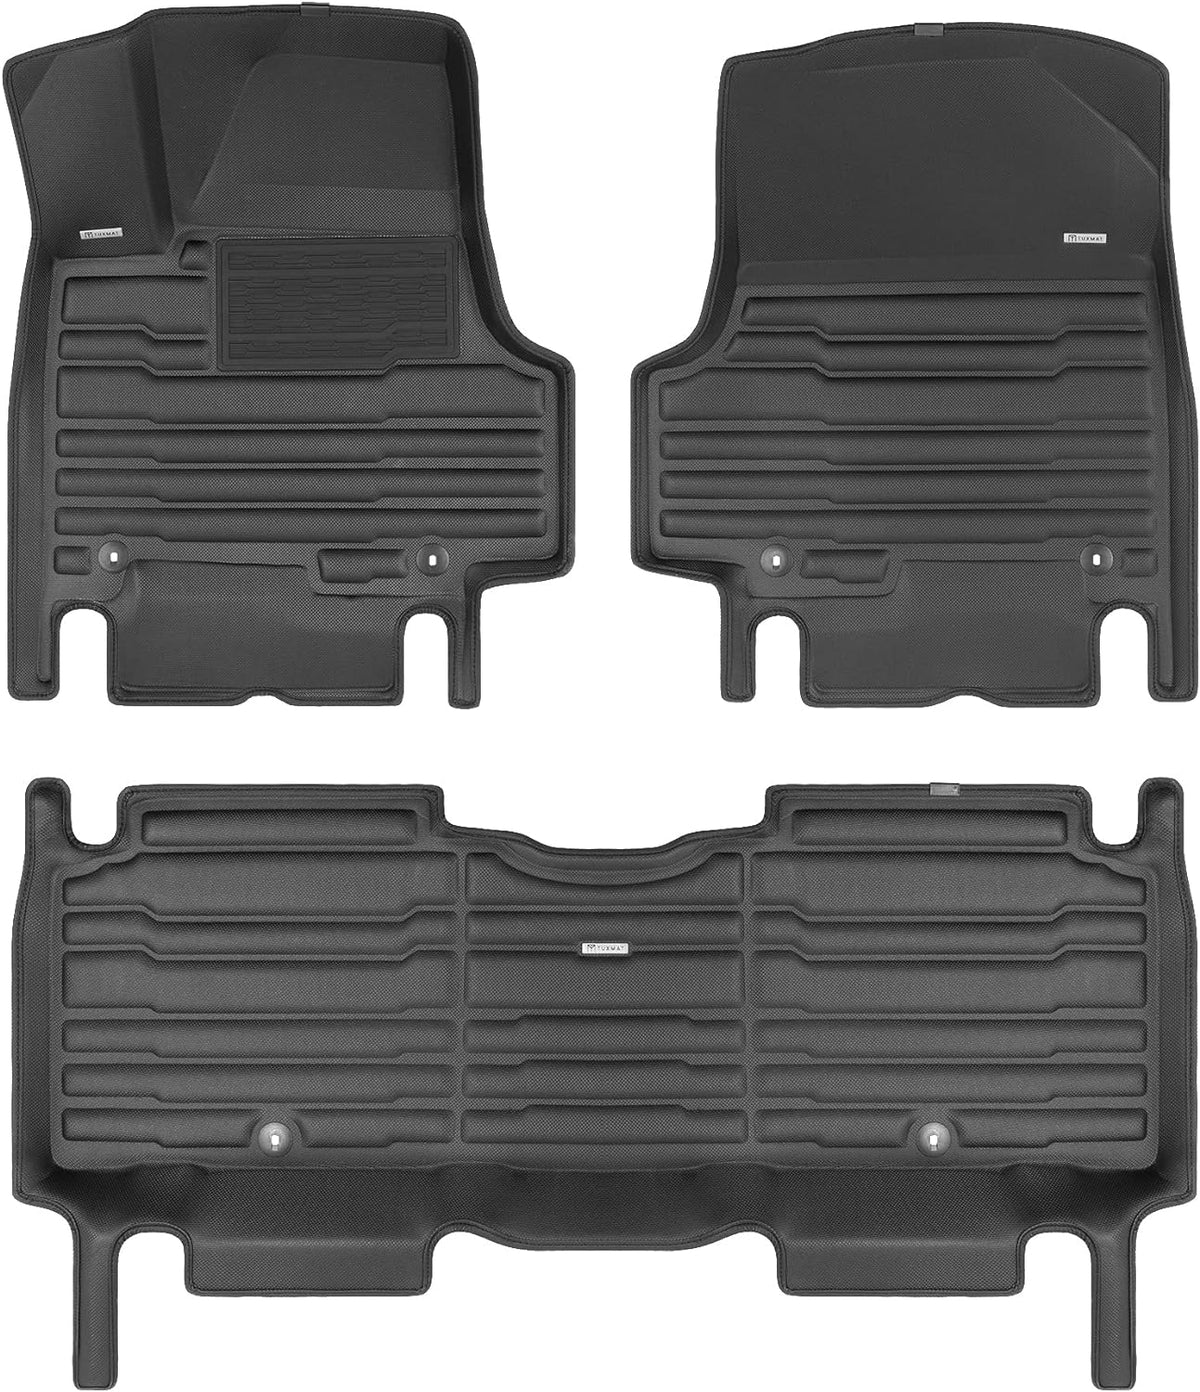 TuxMat 8692 - For Hyundai Ioniq 5 2022-2023 Models - Custom Car Mats